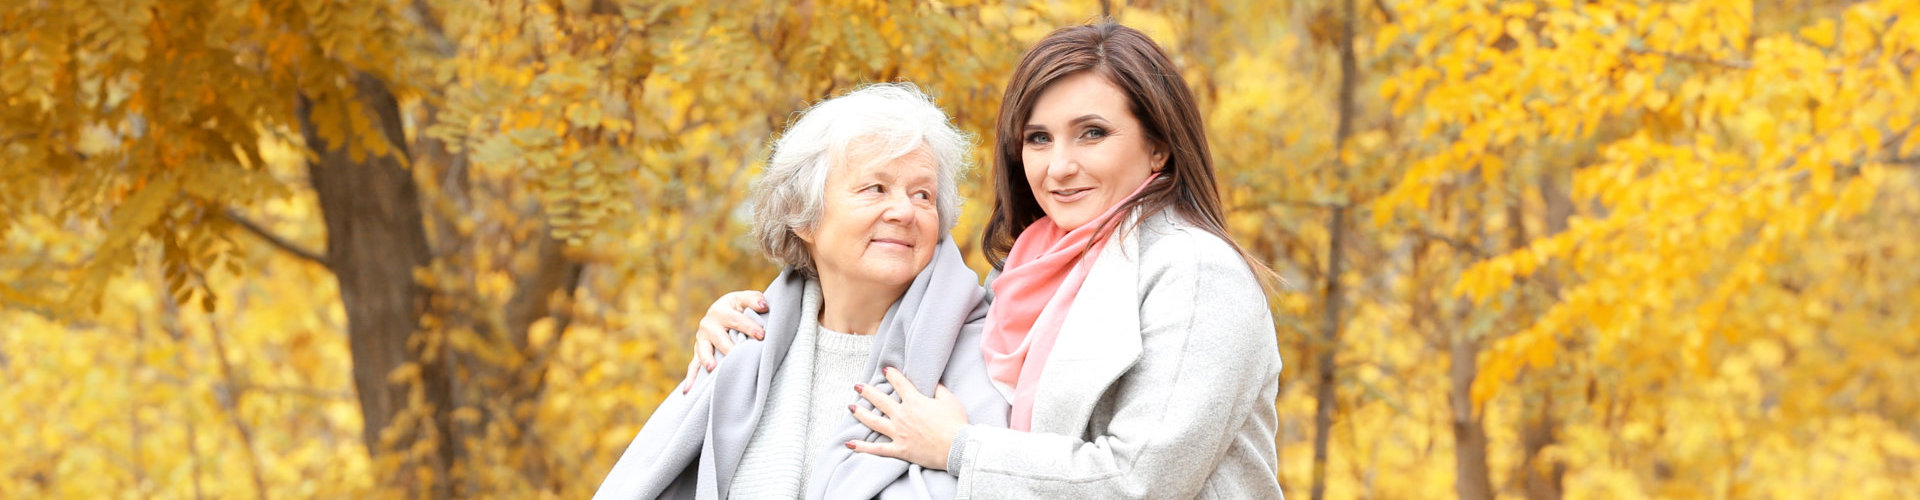 caregiver with her senior patient smiling